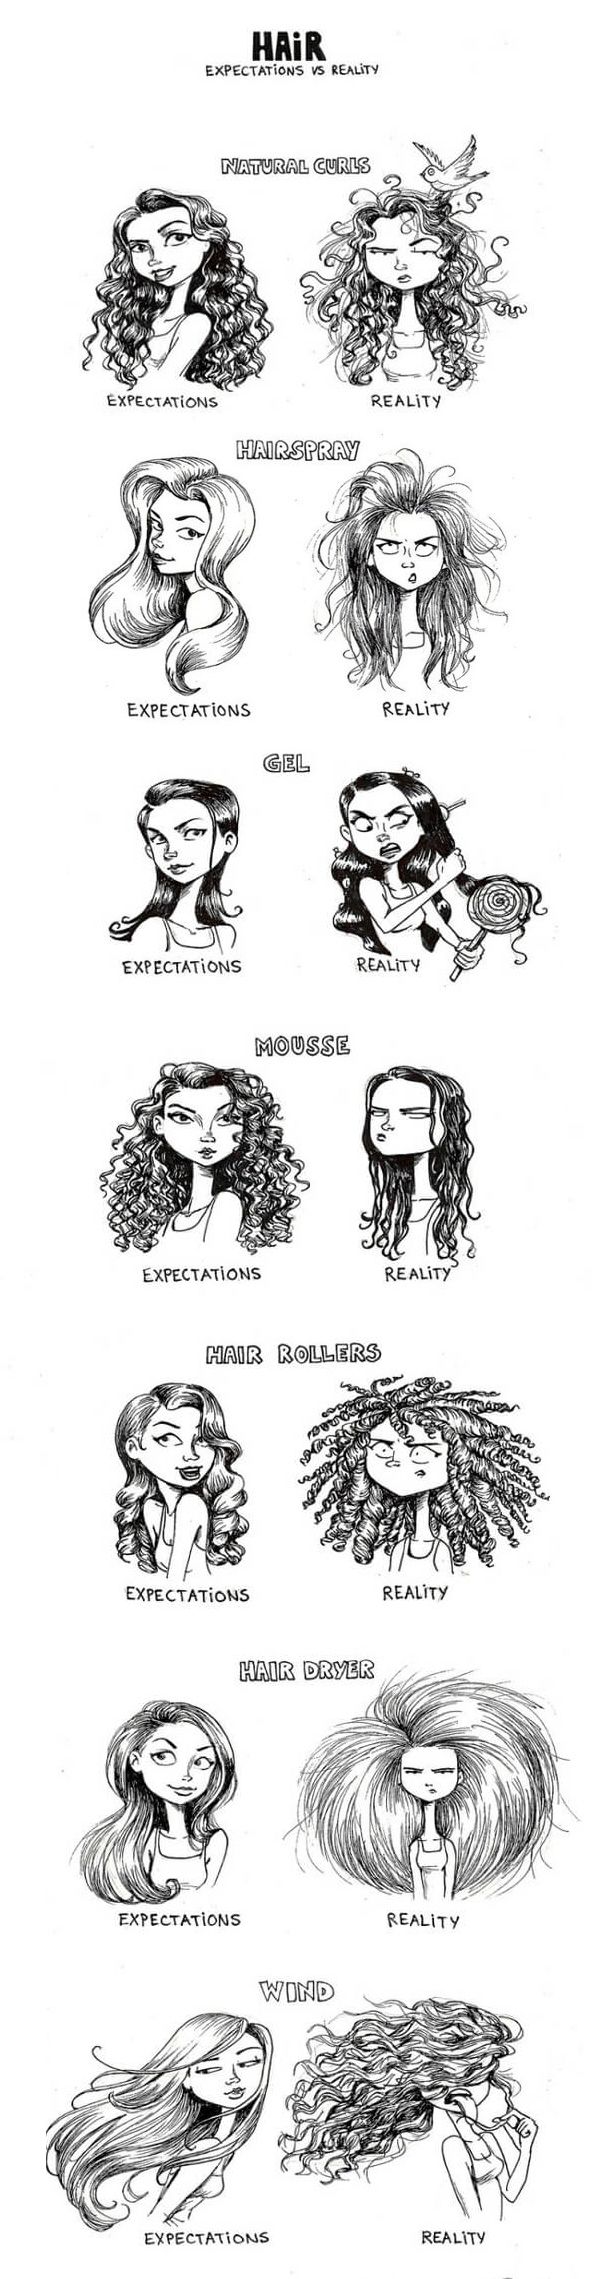 Women's Hair: Expectations vs Reality